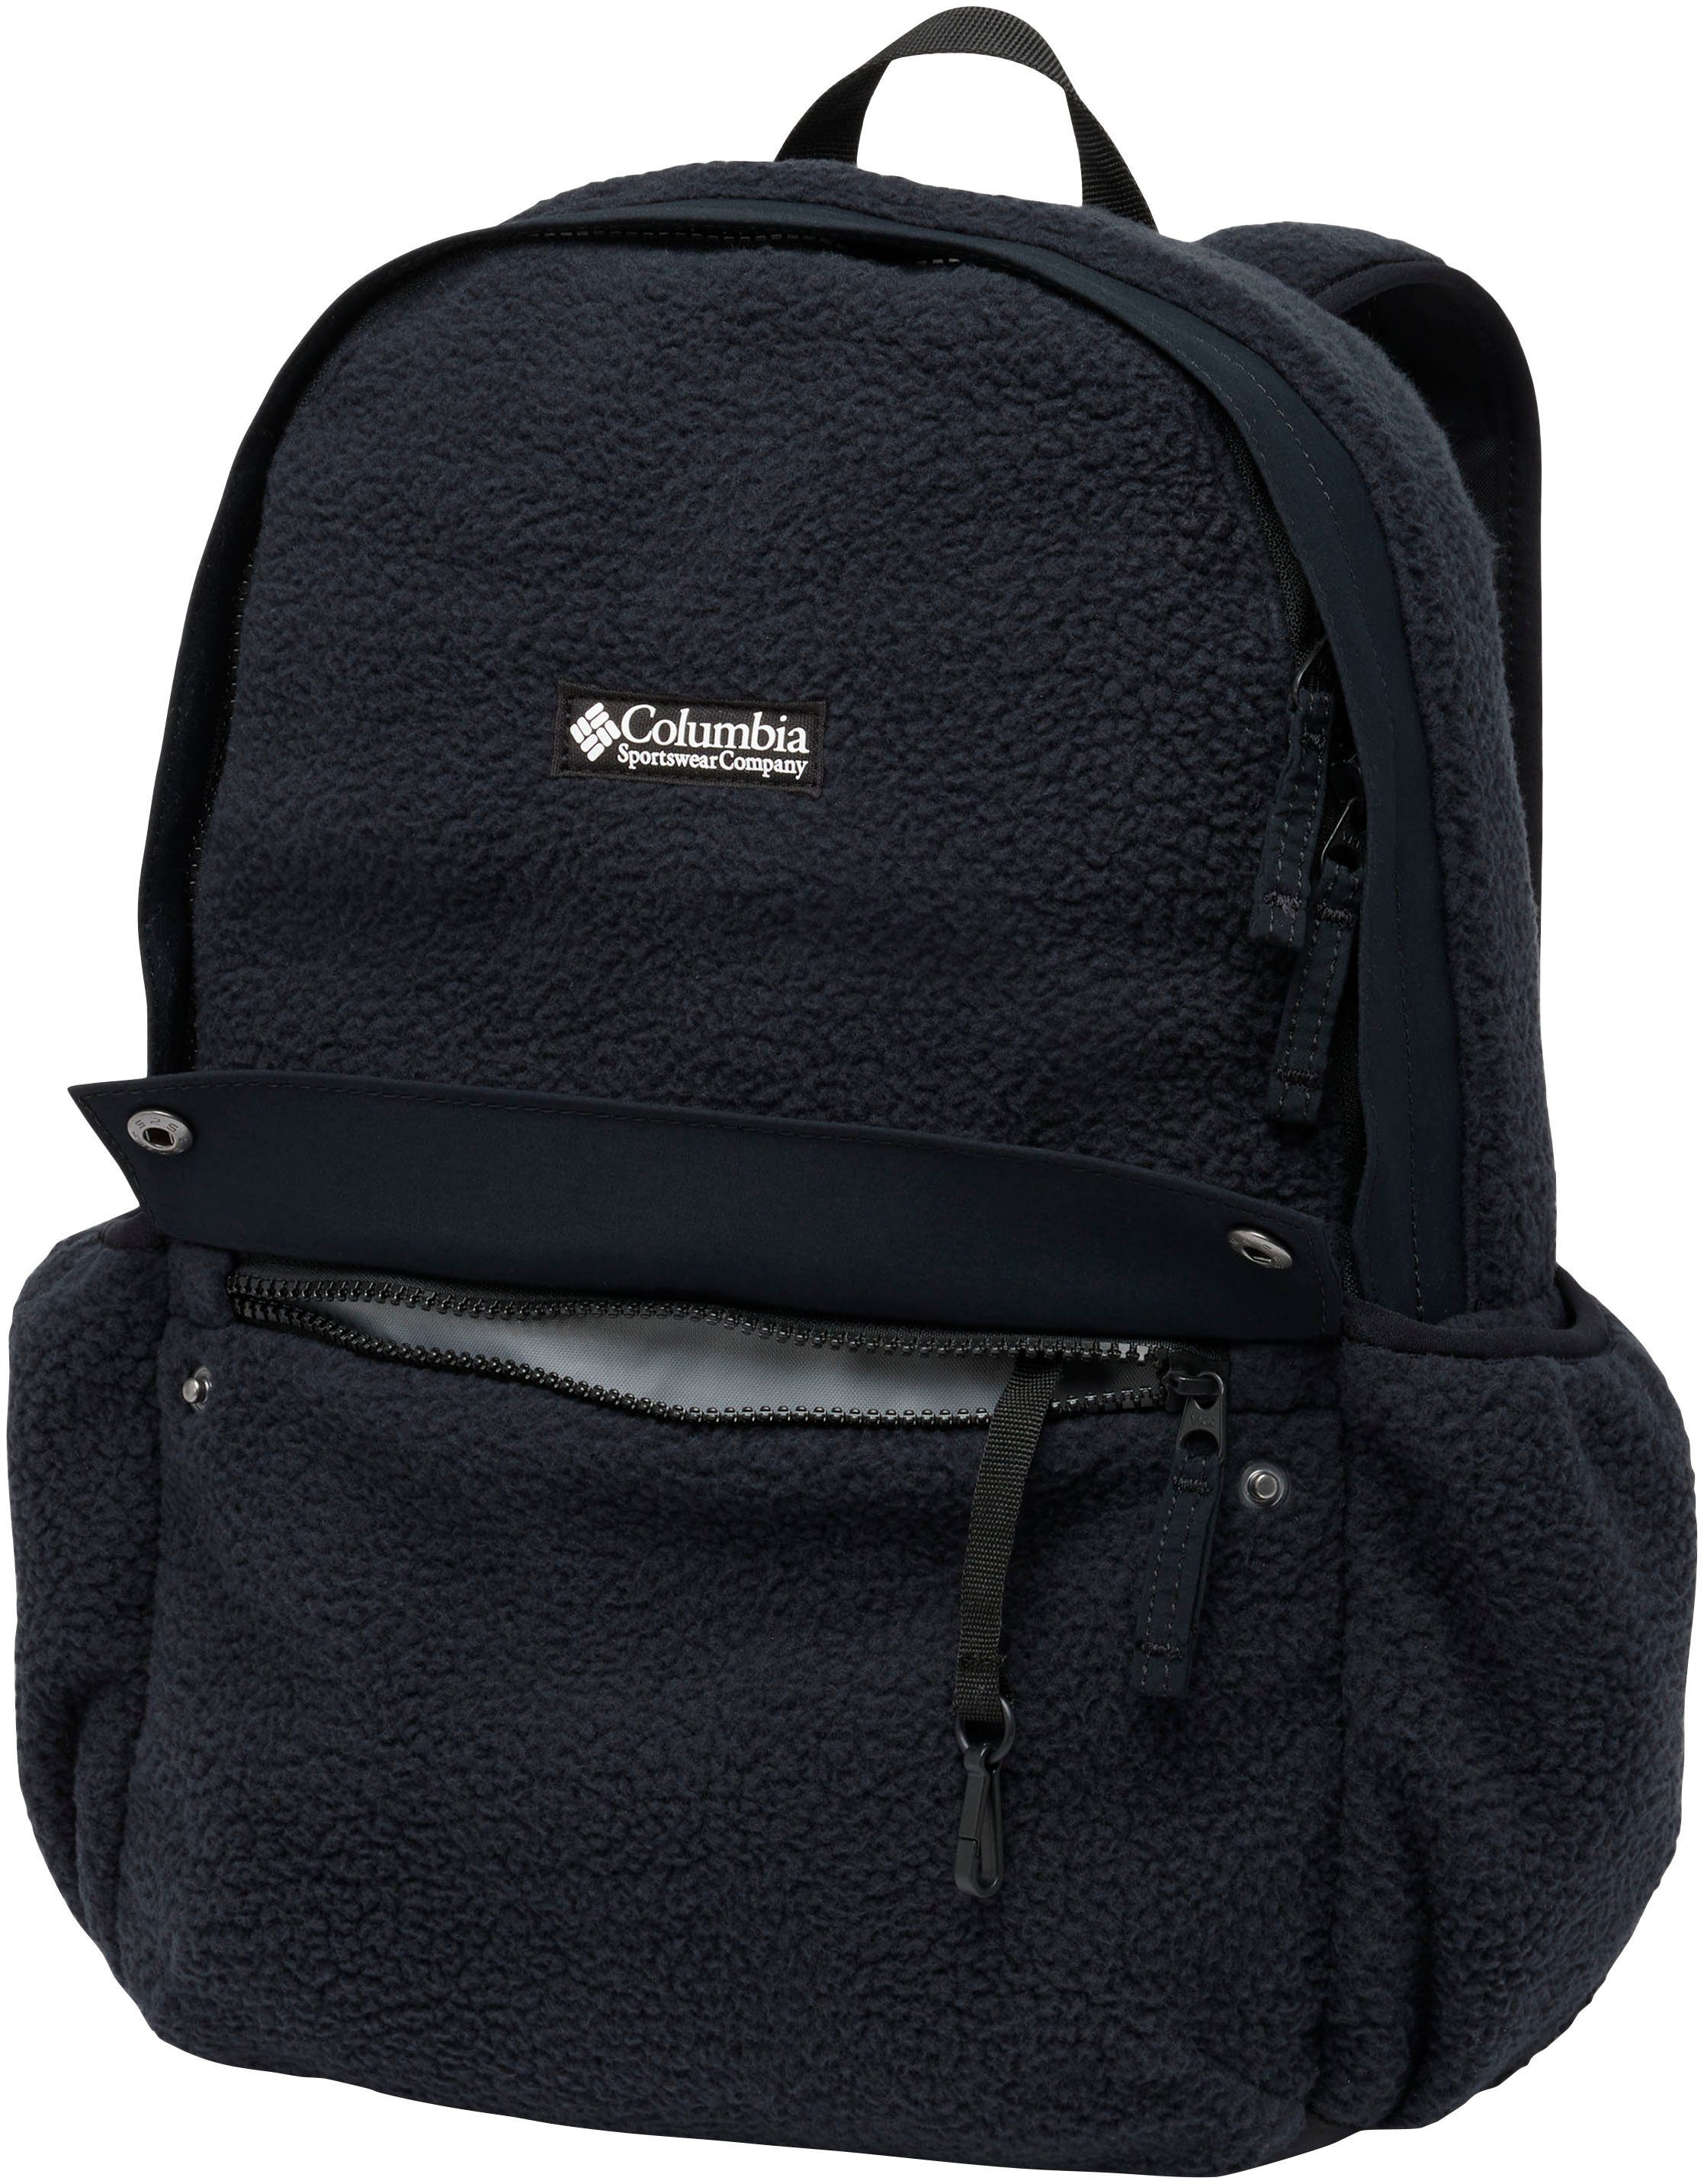 Helvetia Columbia 14L Black Rucksack Backpack